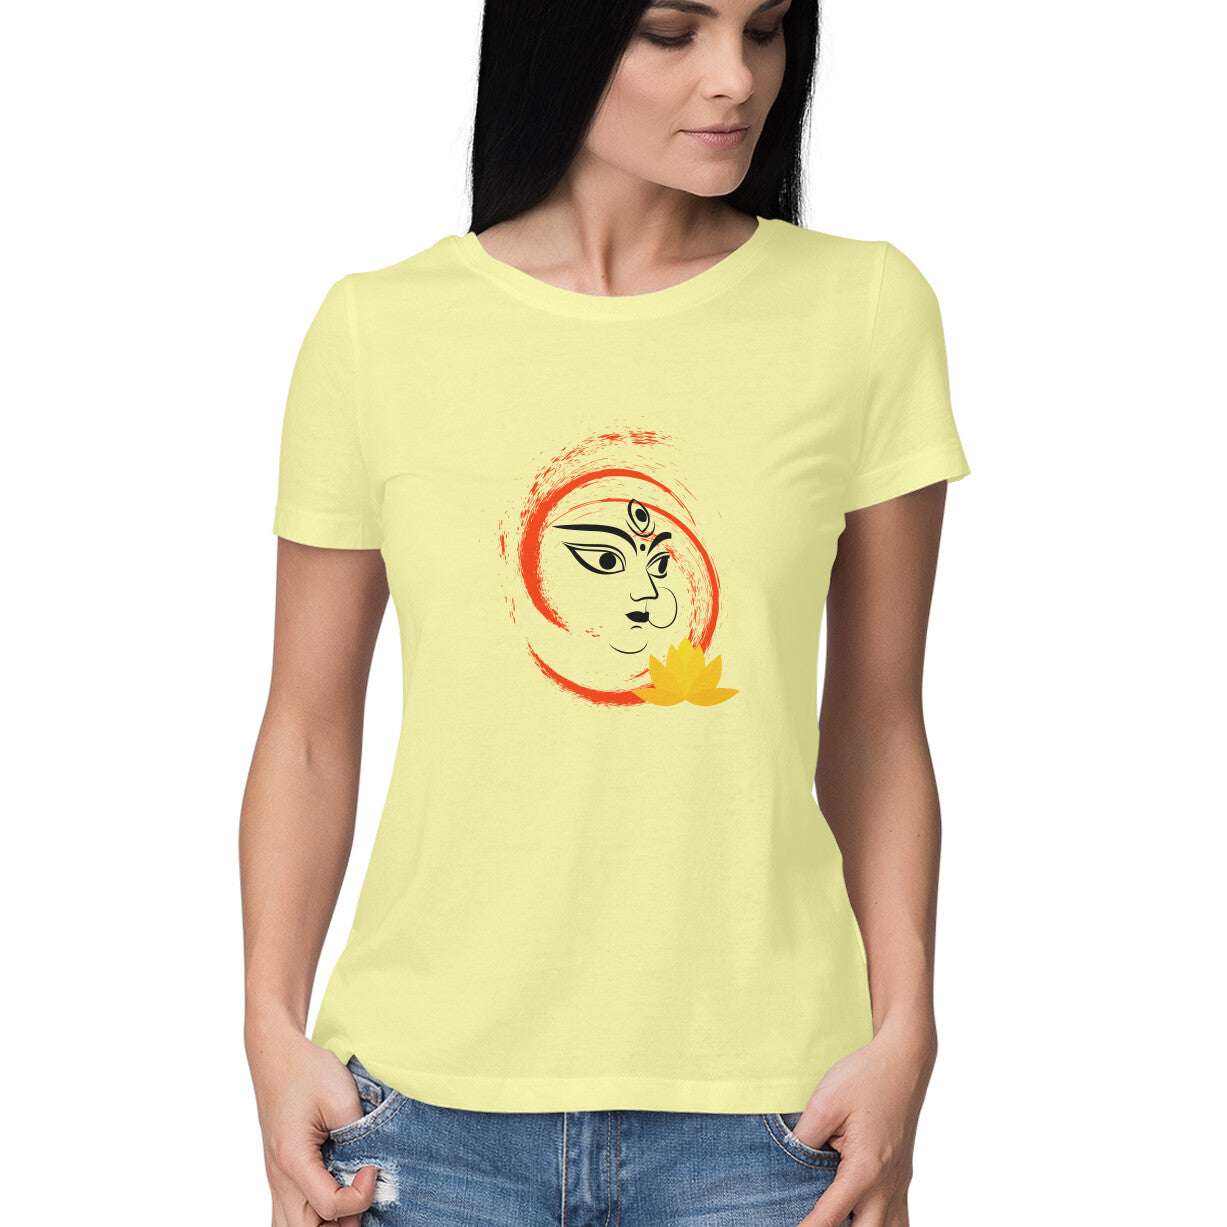 Powerful Mother Goddess Women's T-Shirt - Circle of Life Design